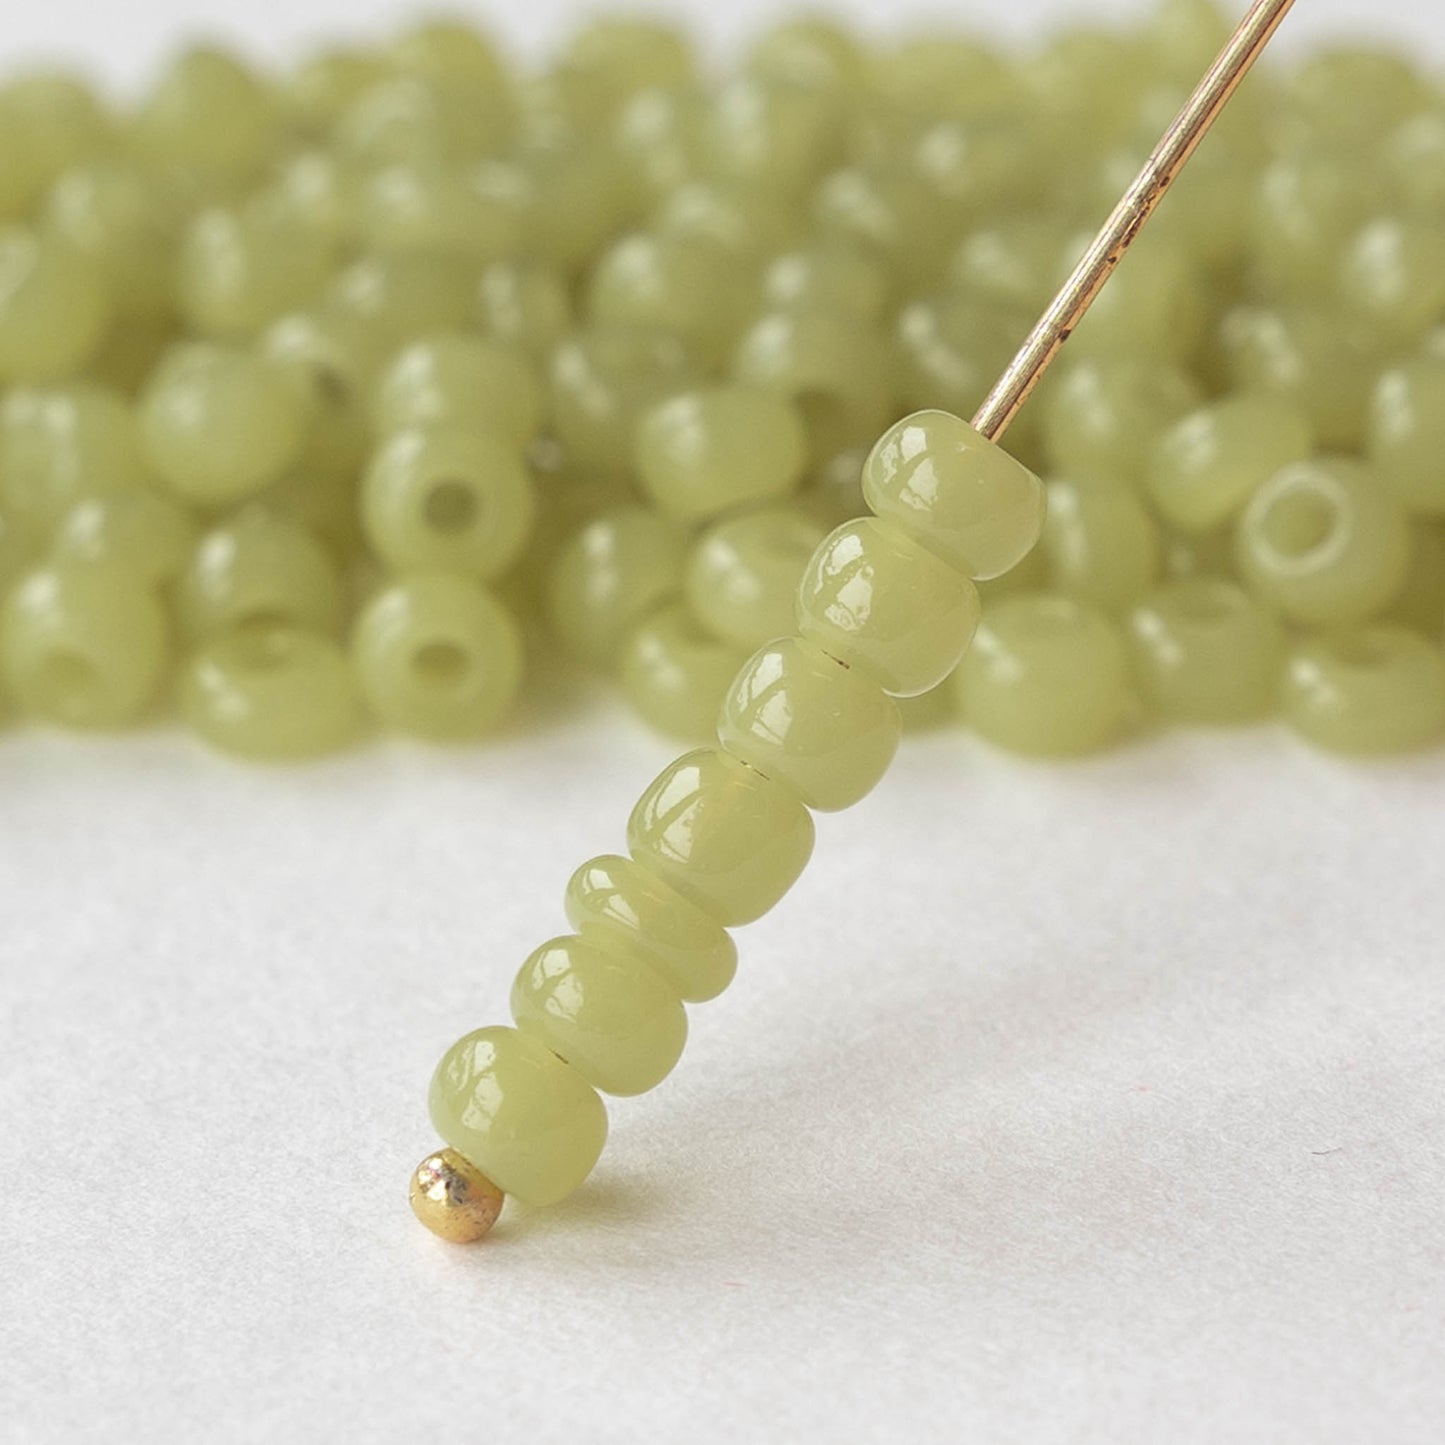 6/0 Seed Beads - Light Jade Green - 20 grams